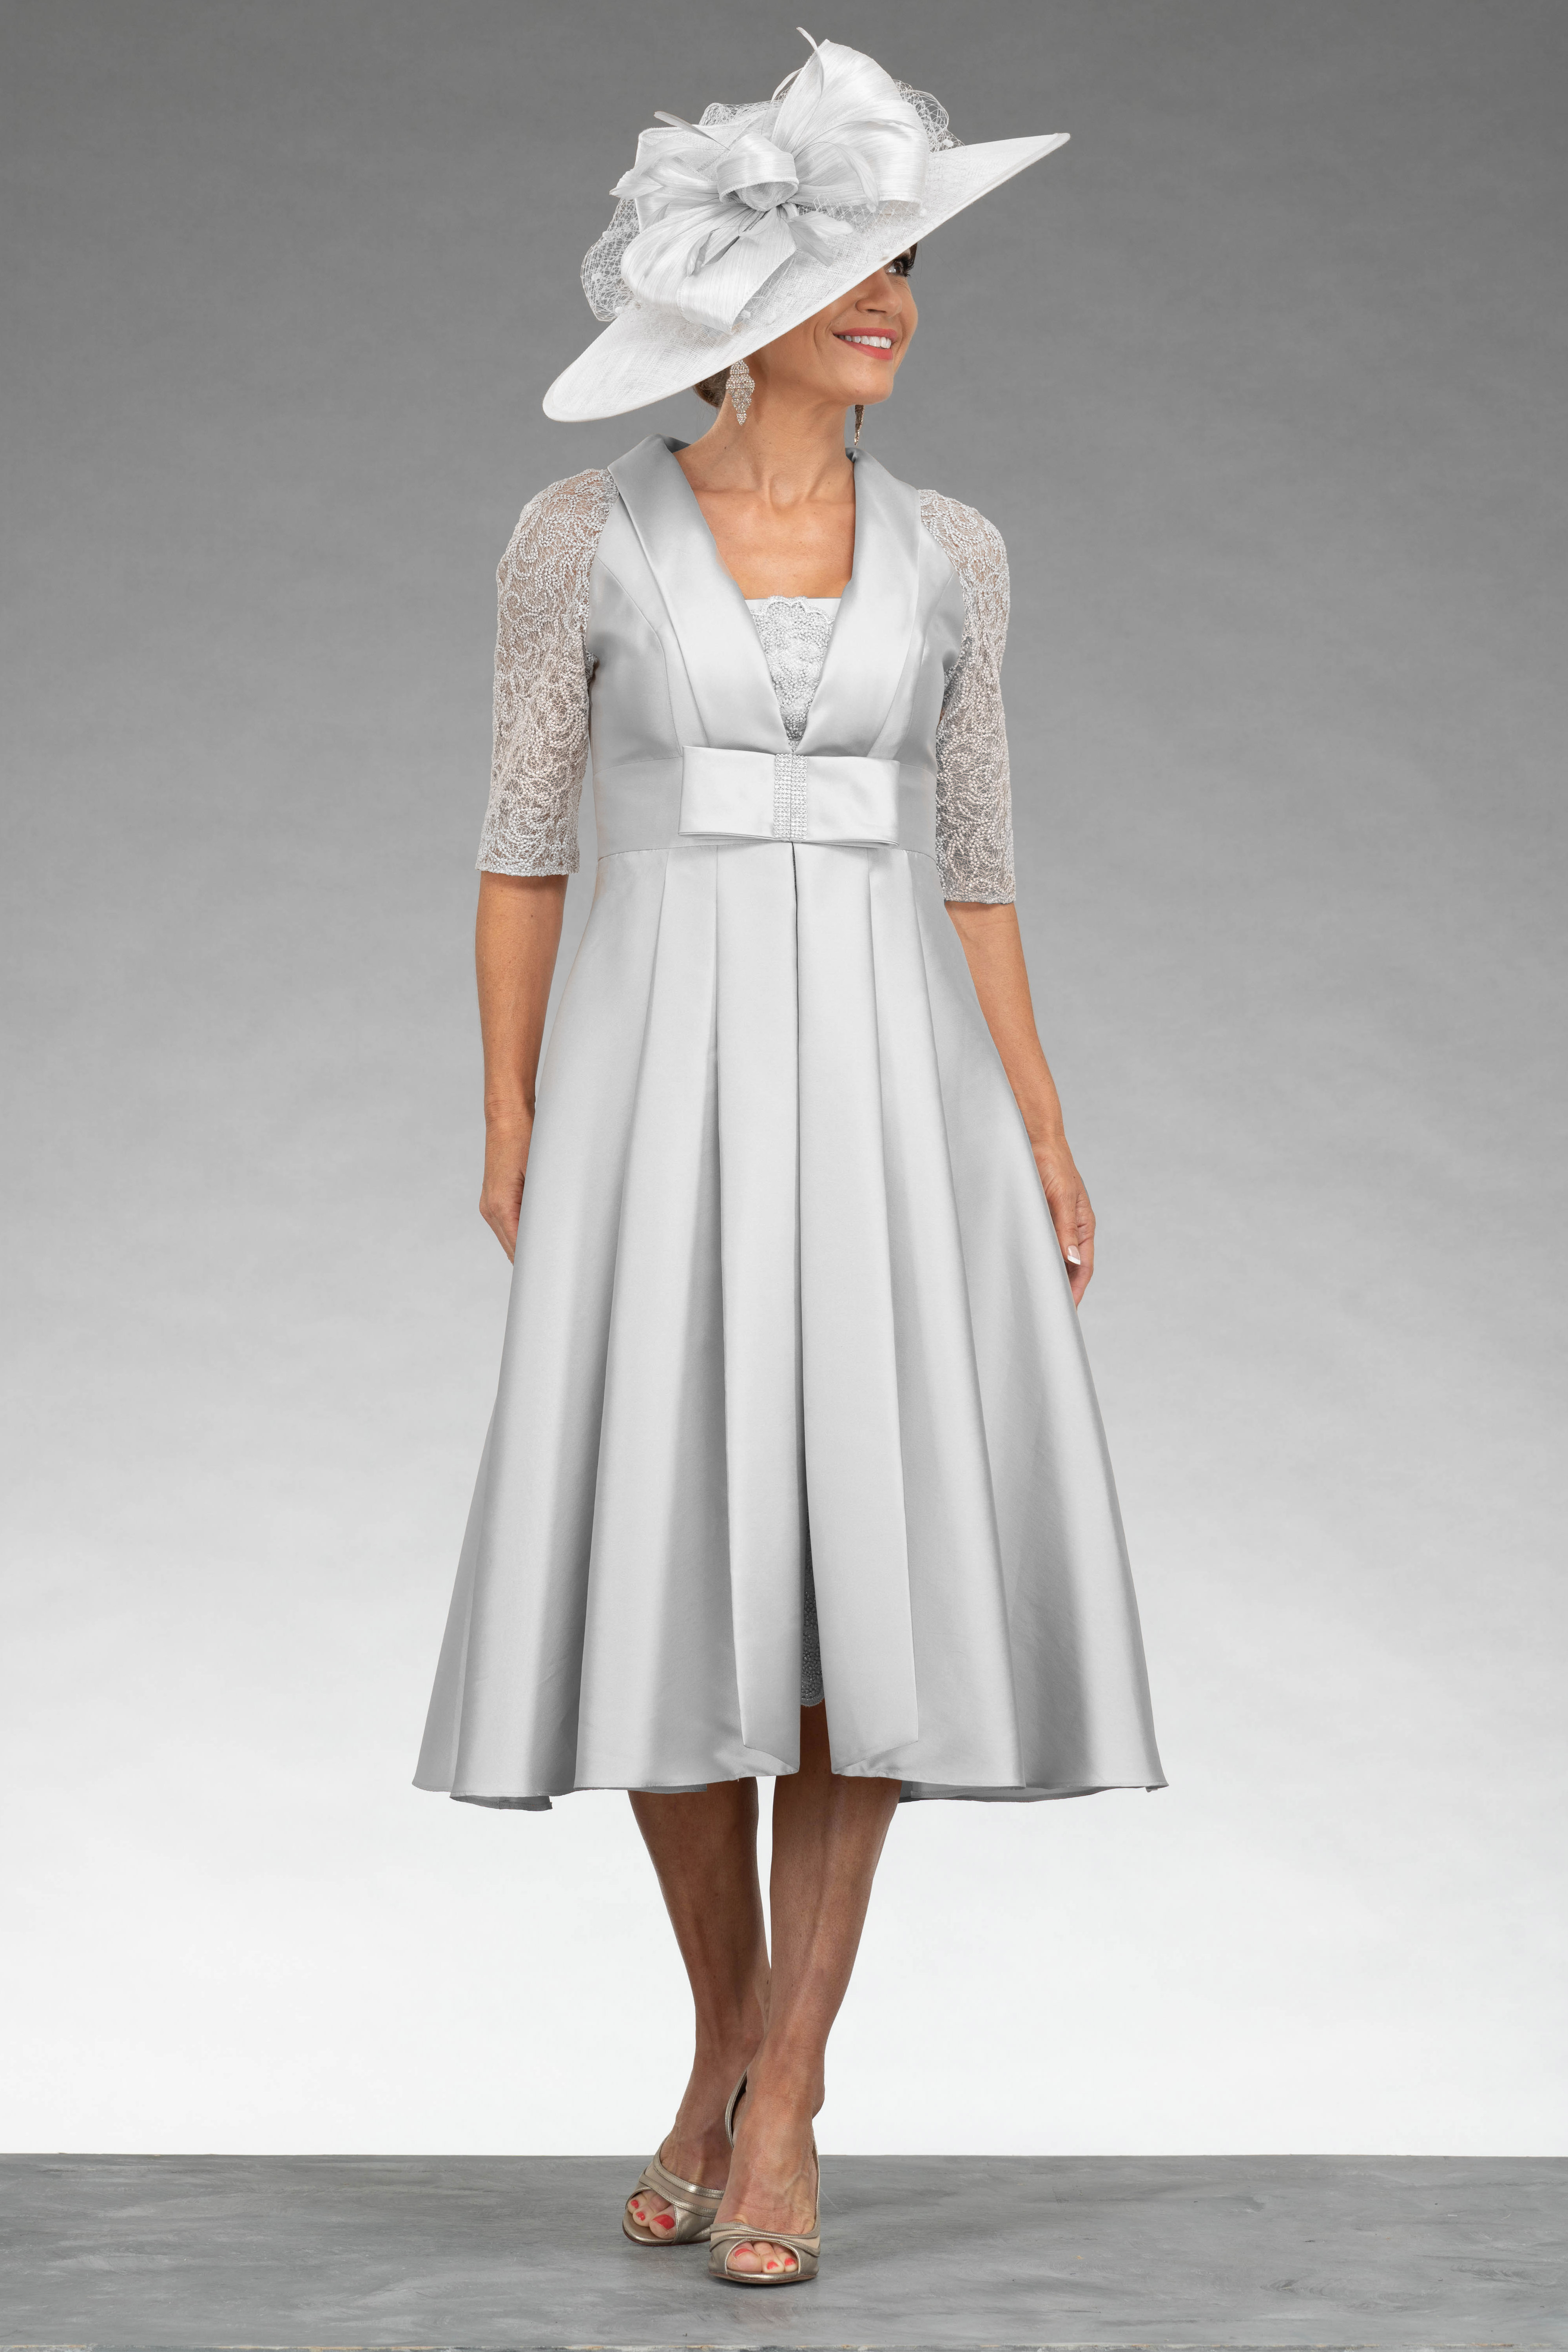 New Design Lace Bridal Jackets Coat For Wedding Dress Long Sleeve Lace Cape  | eBay